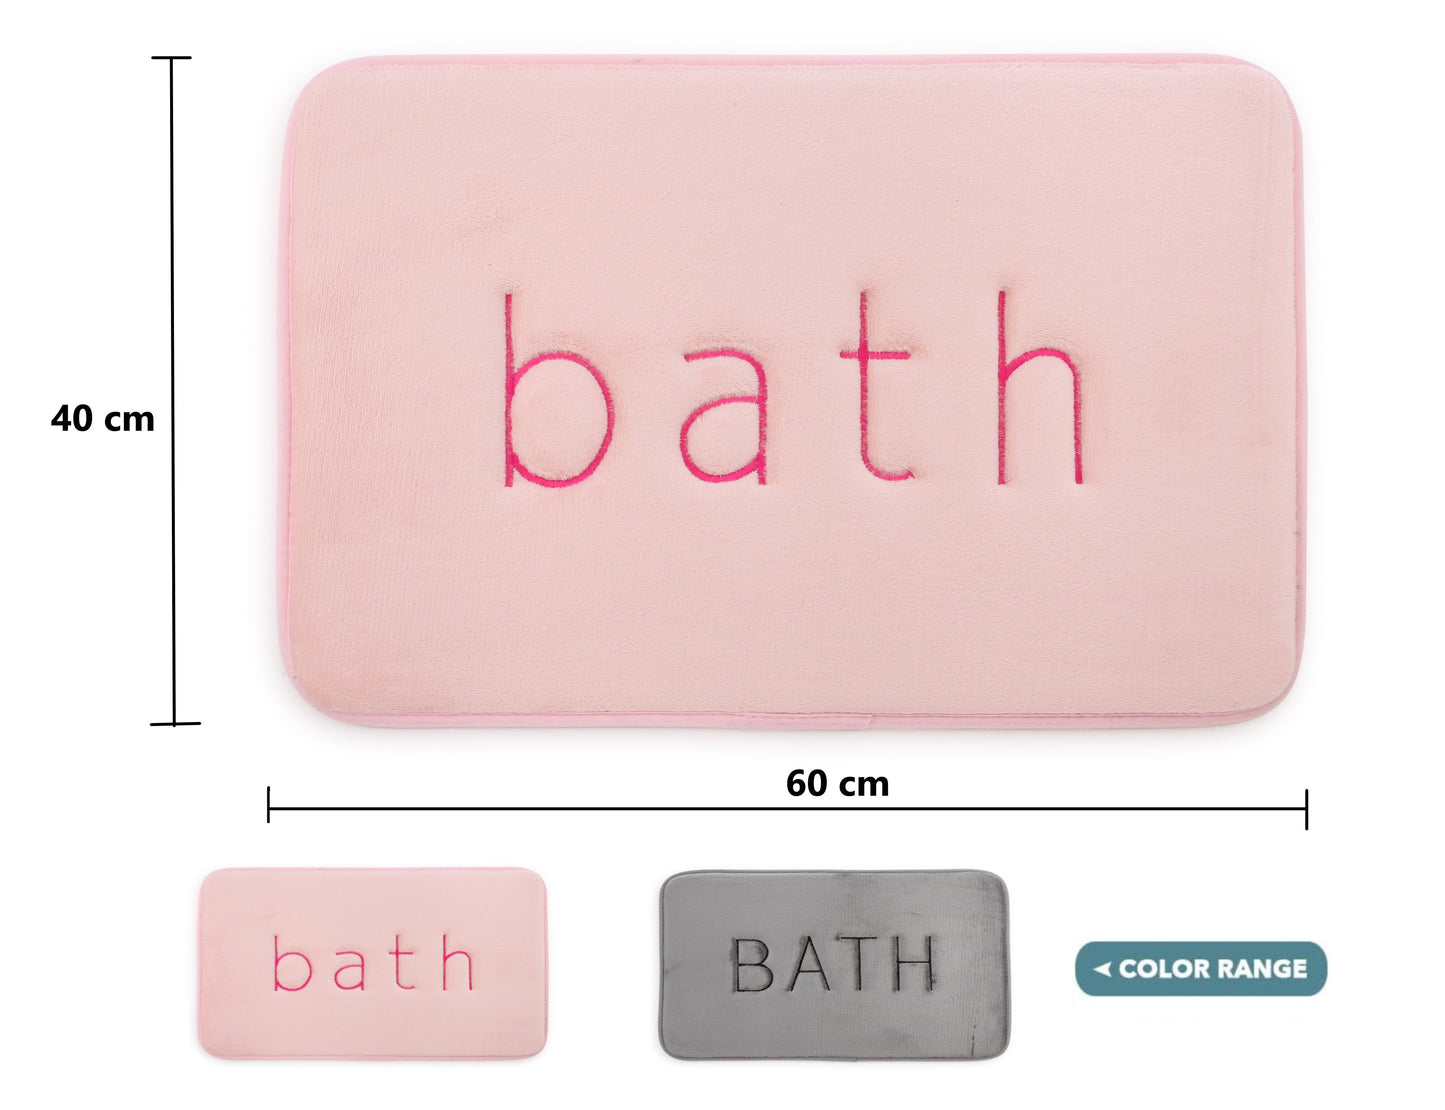 Extra Thick Memory Foam & Super Comfort Bath Rug Mat for Bathroom (60 x 40 cm, Pink) - Home & Garden > Bathroom Accessories - Zanlana Design and Home Decor